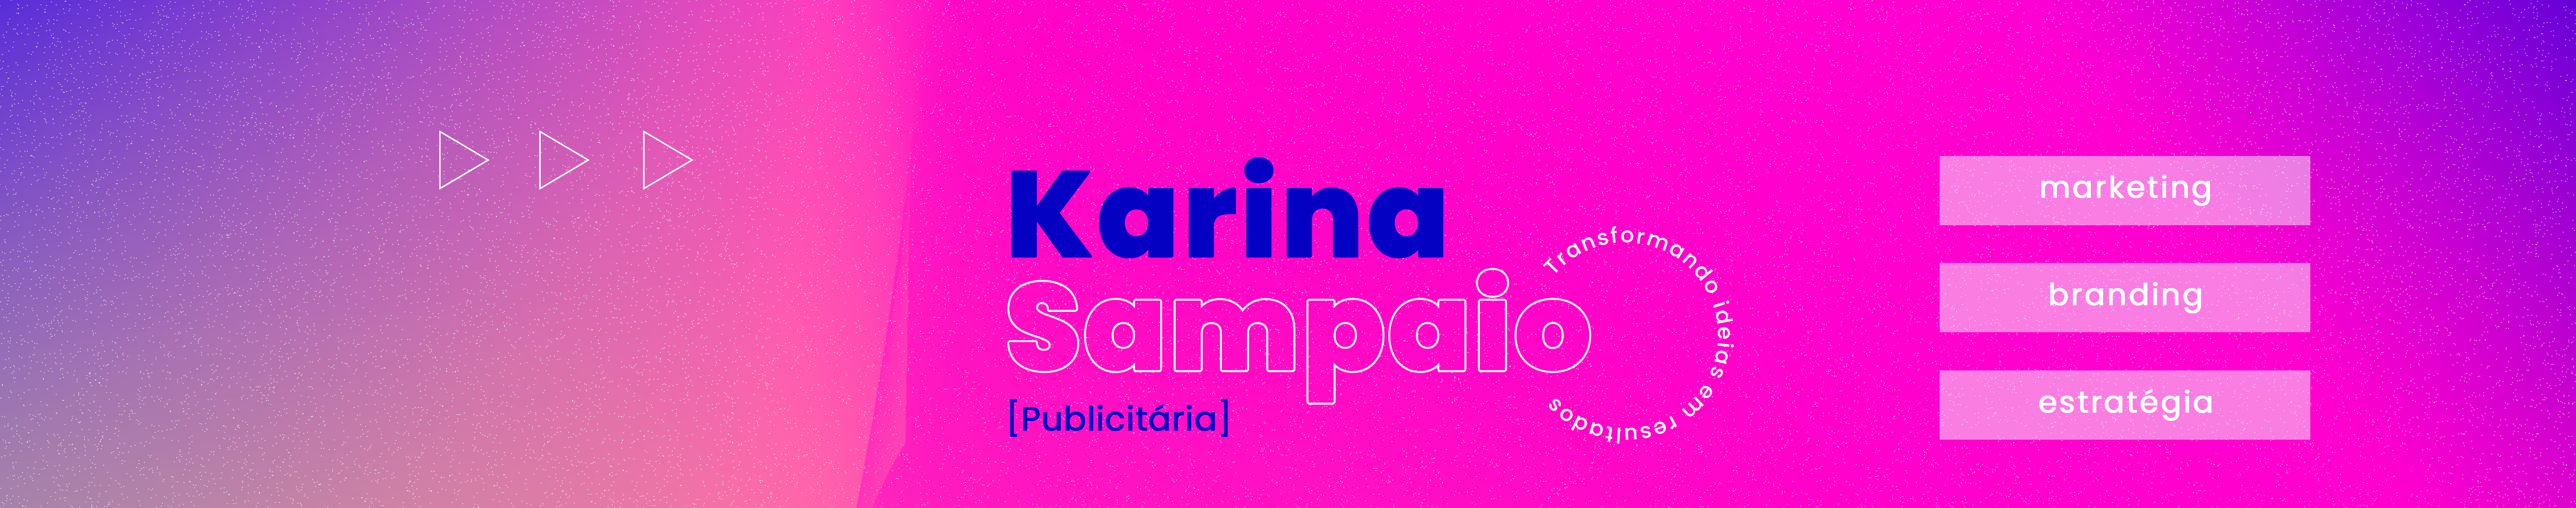 Karina Sampaio's profile banner